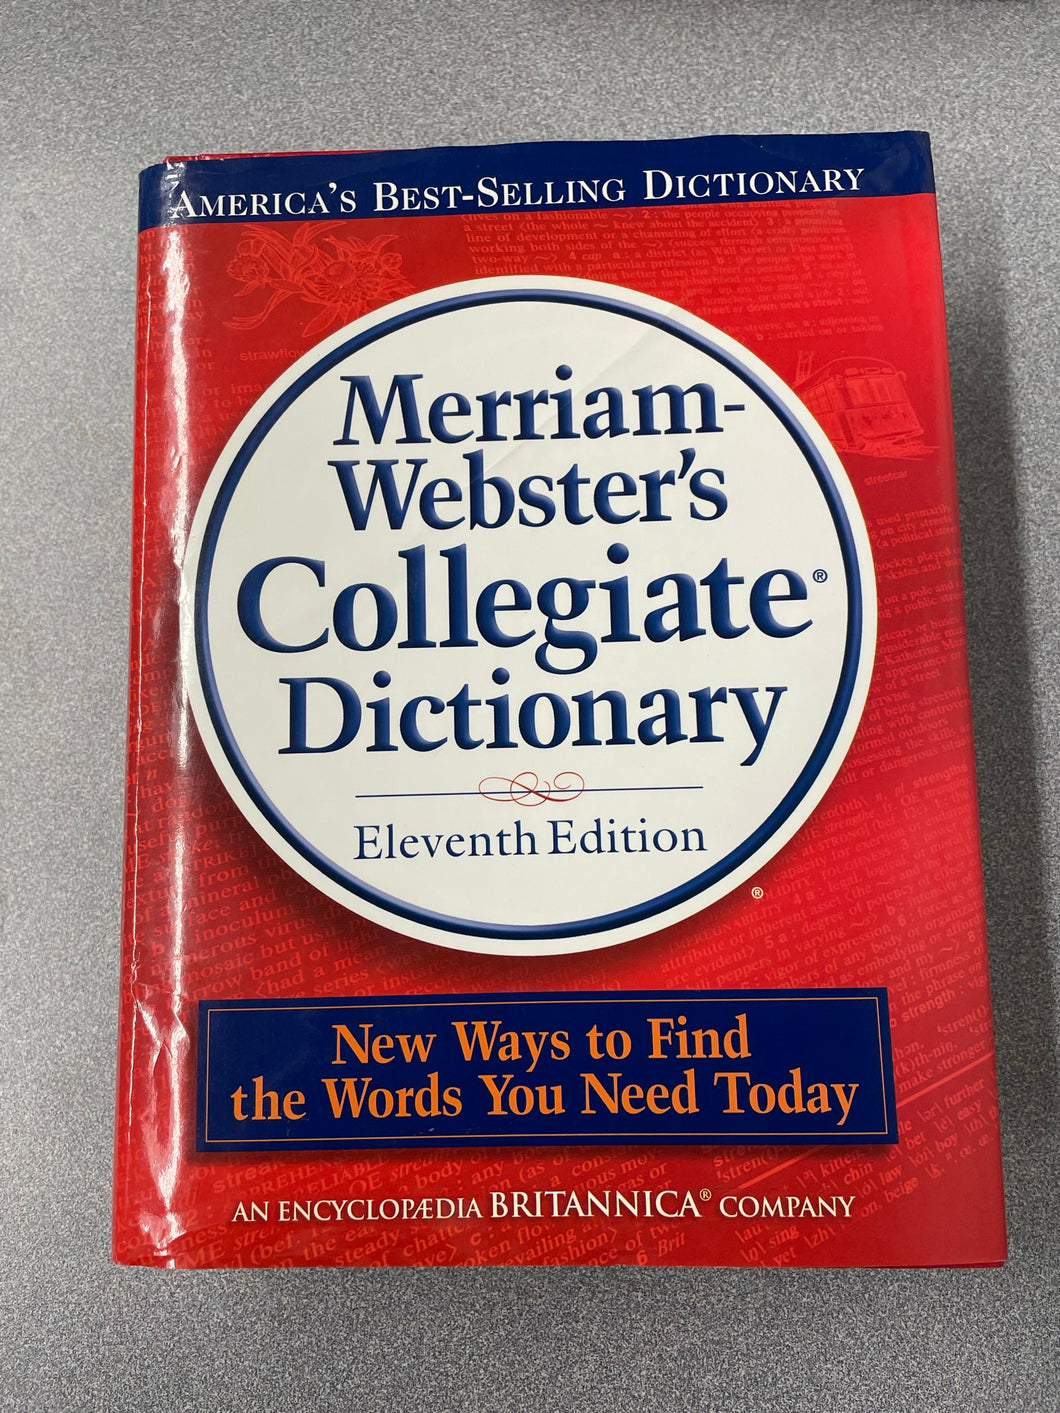 Merriam-Webster's Collegiate Dictionary, Eleventh Edition [2004] REF 6/23